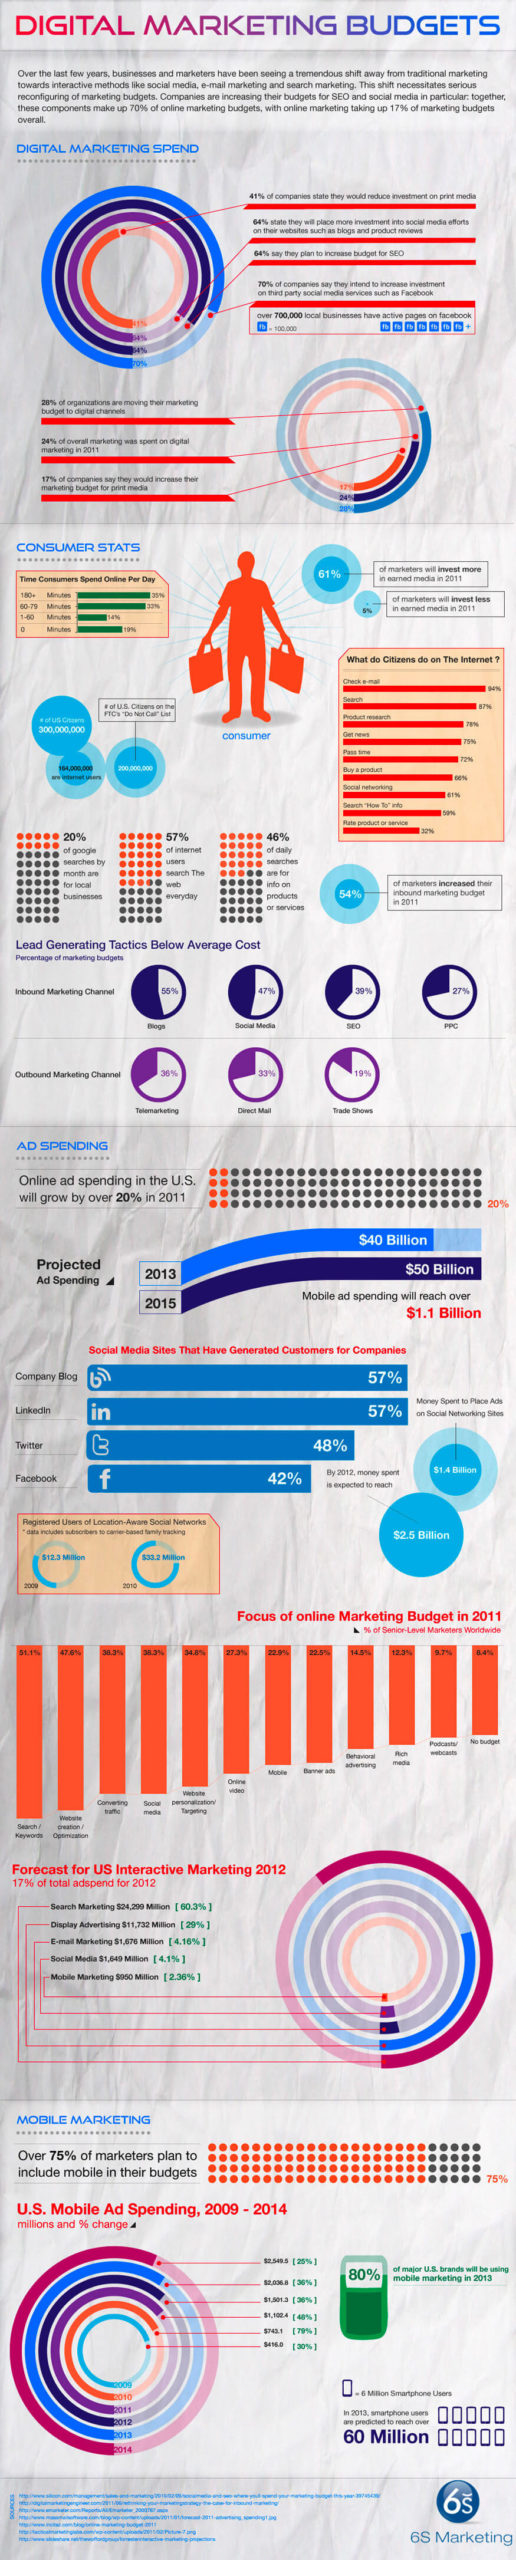 digital-marketing-budget-trends-2012